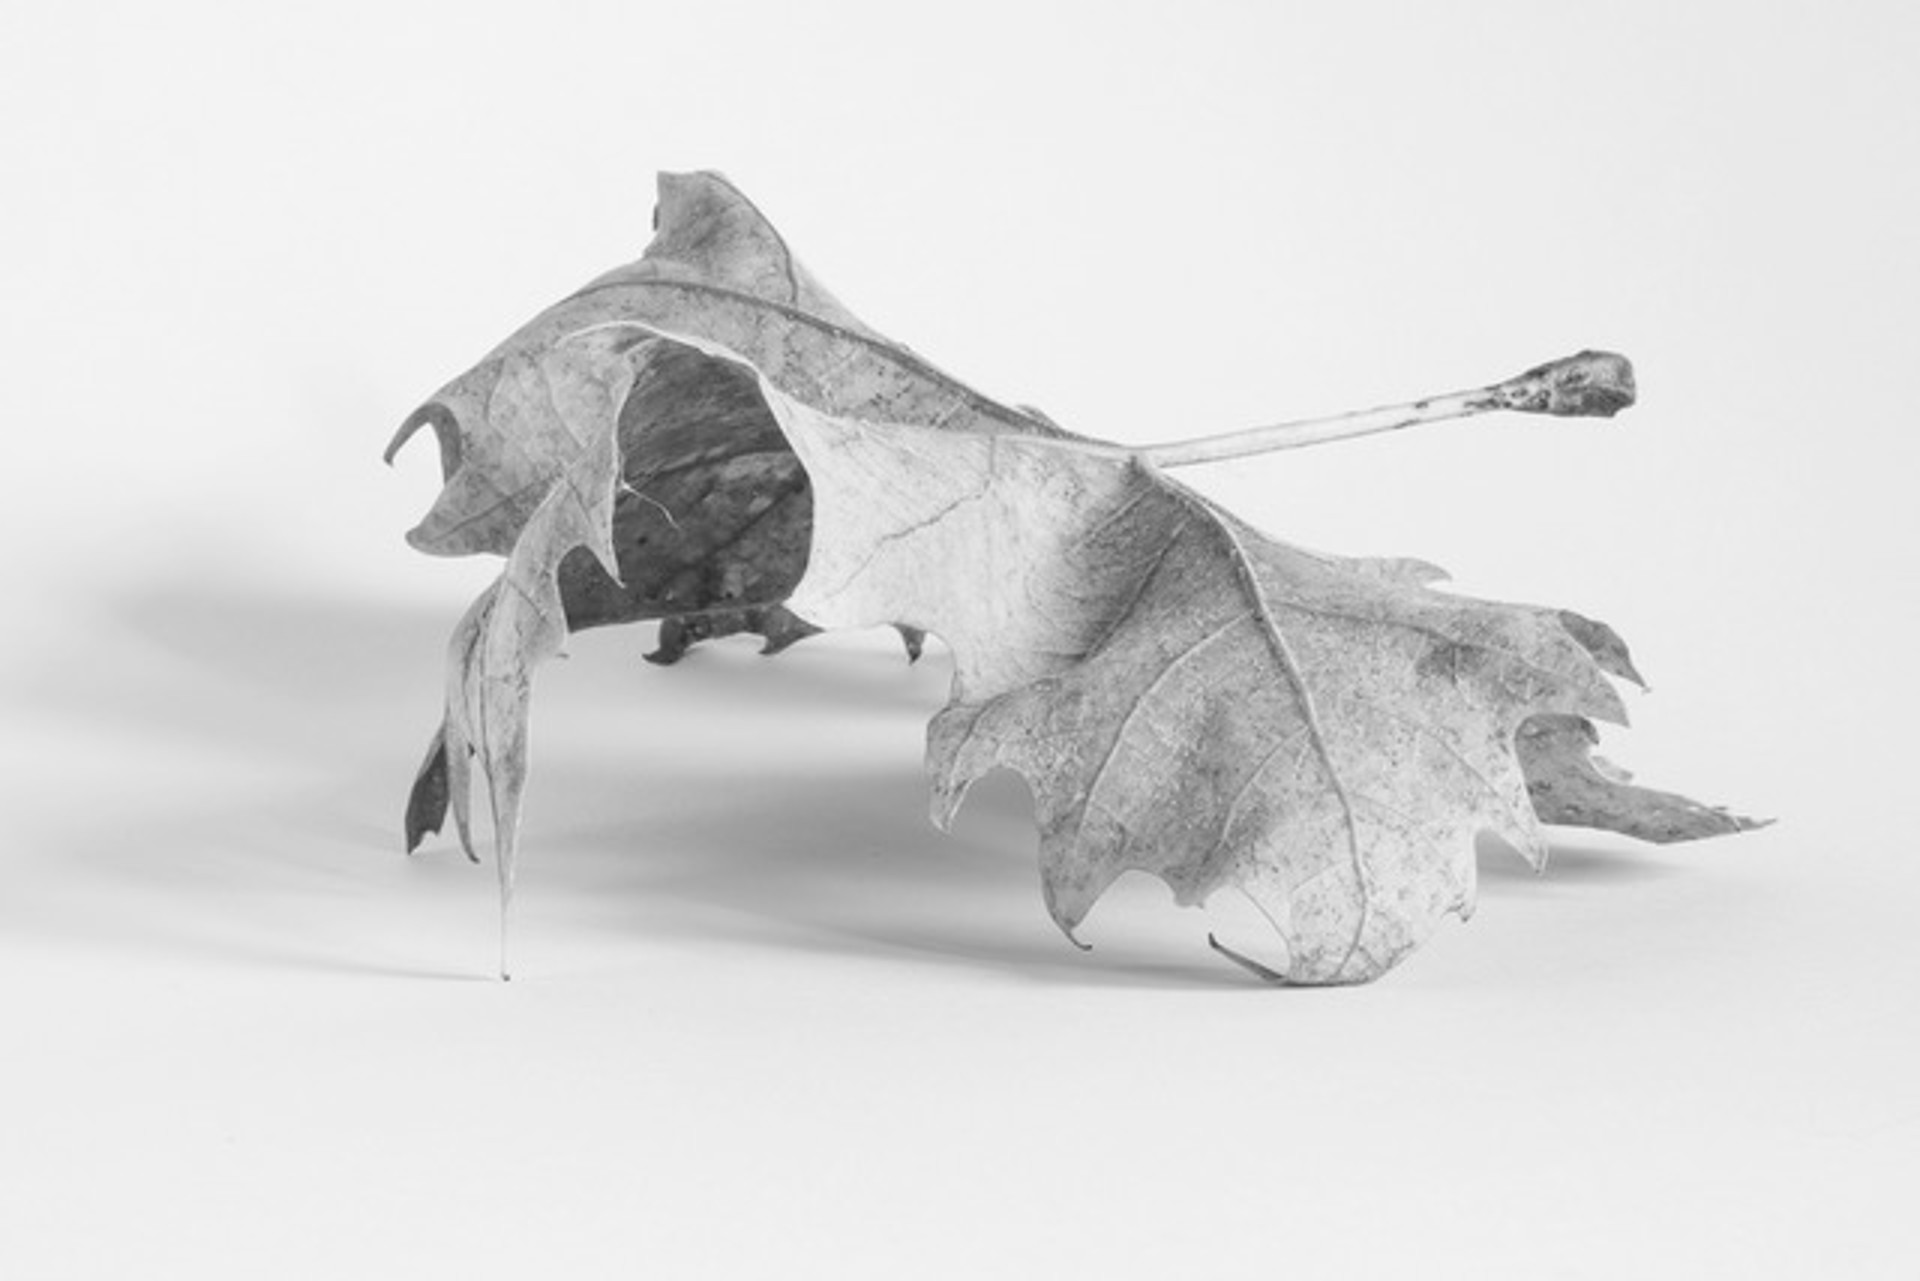 Every Leaf: 0501 by Alyson Belcher